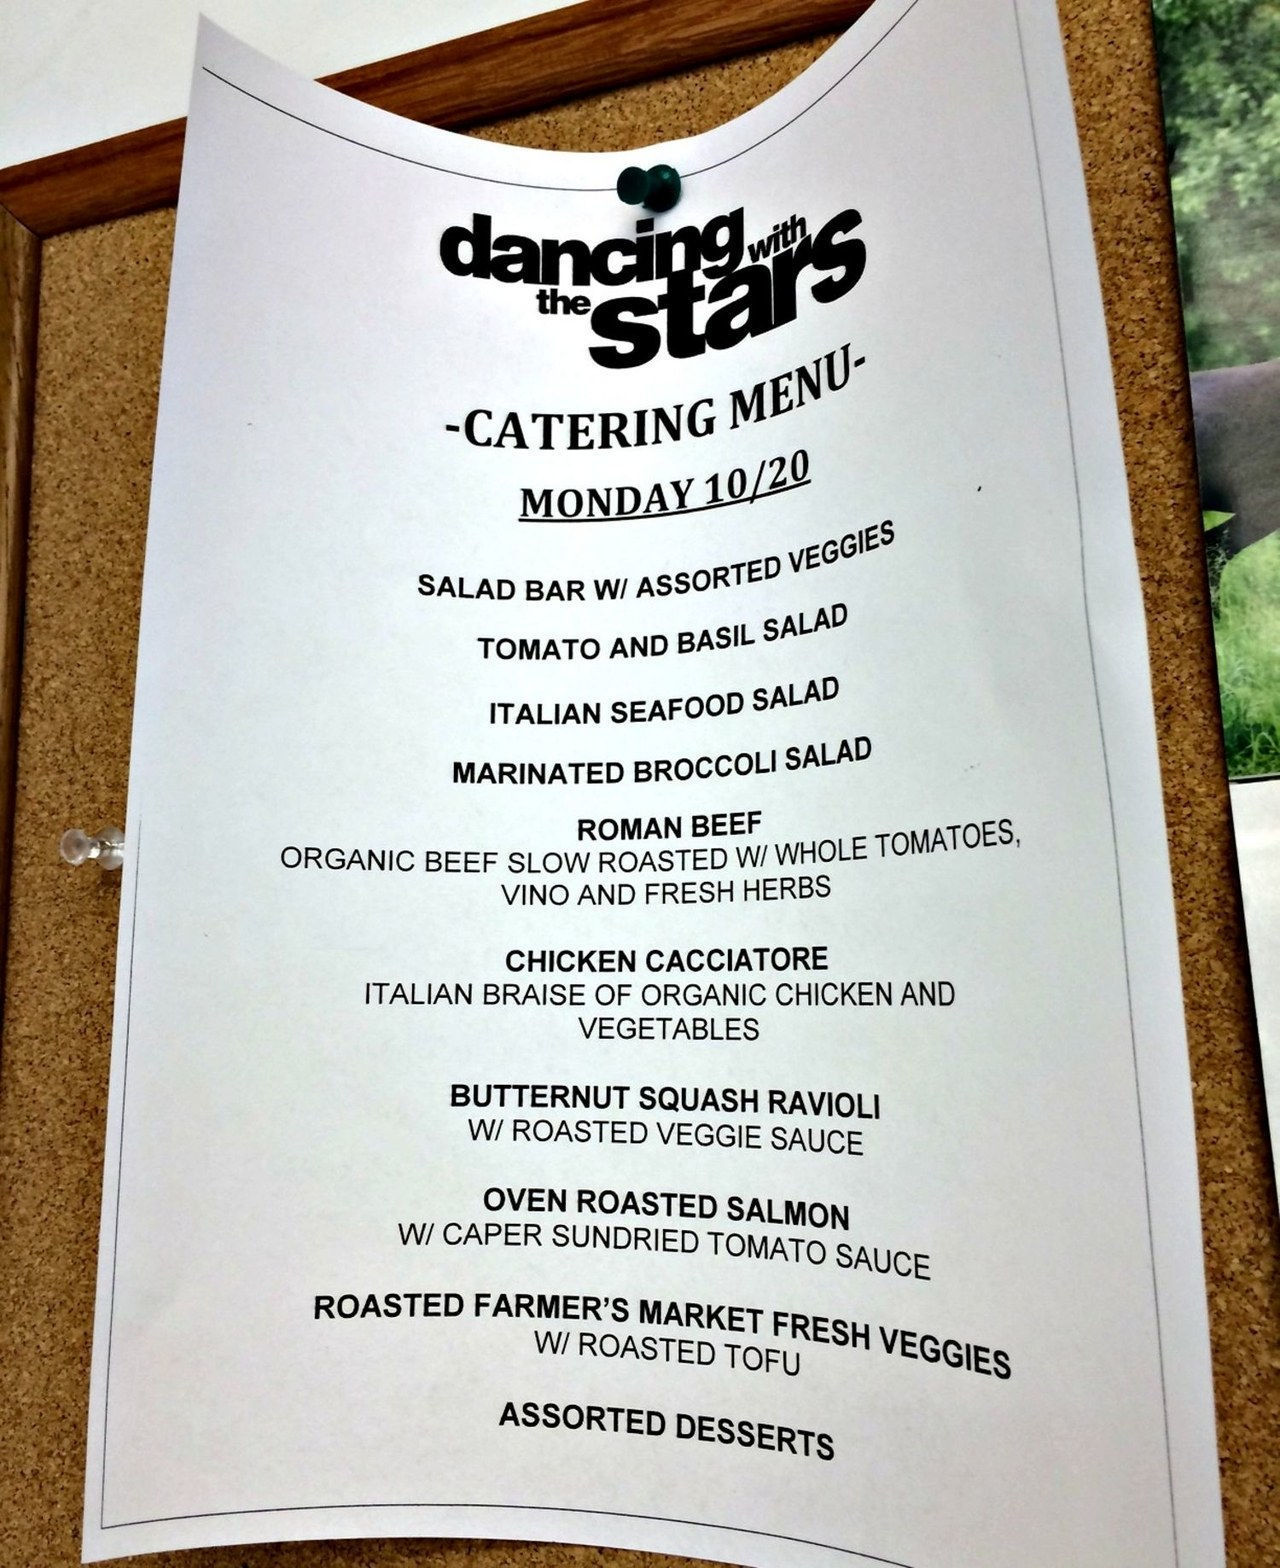 DWTS catering menu